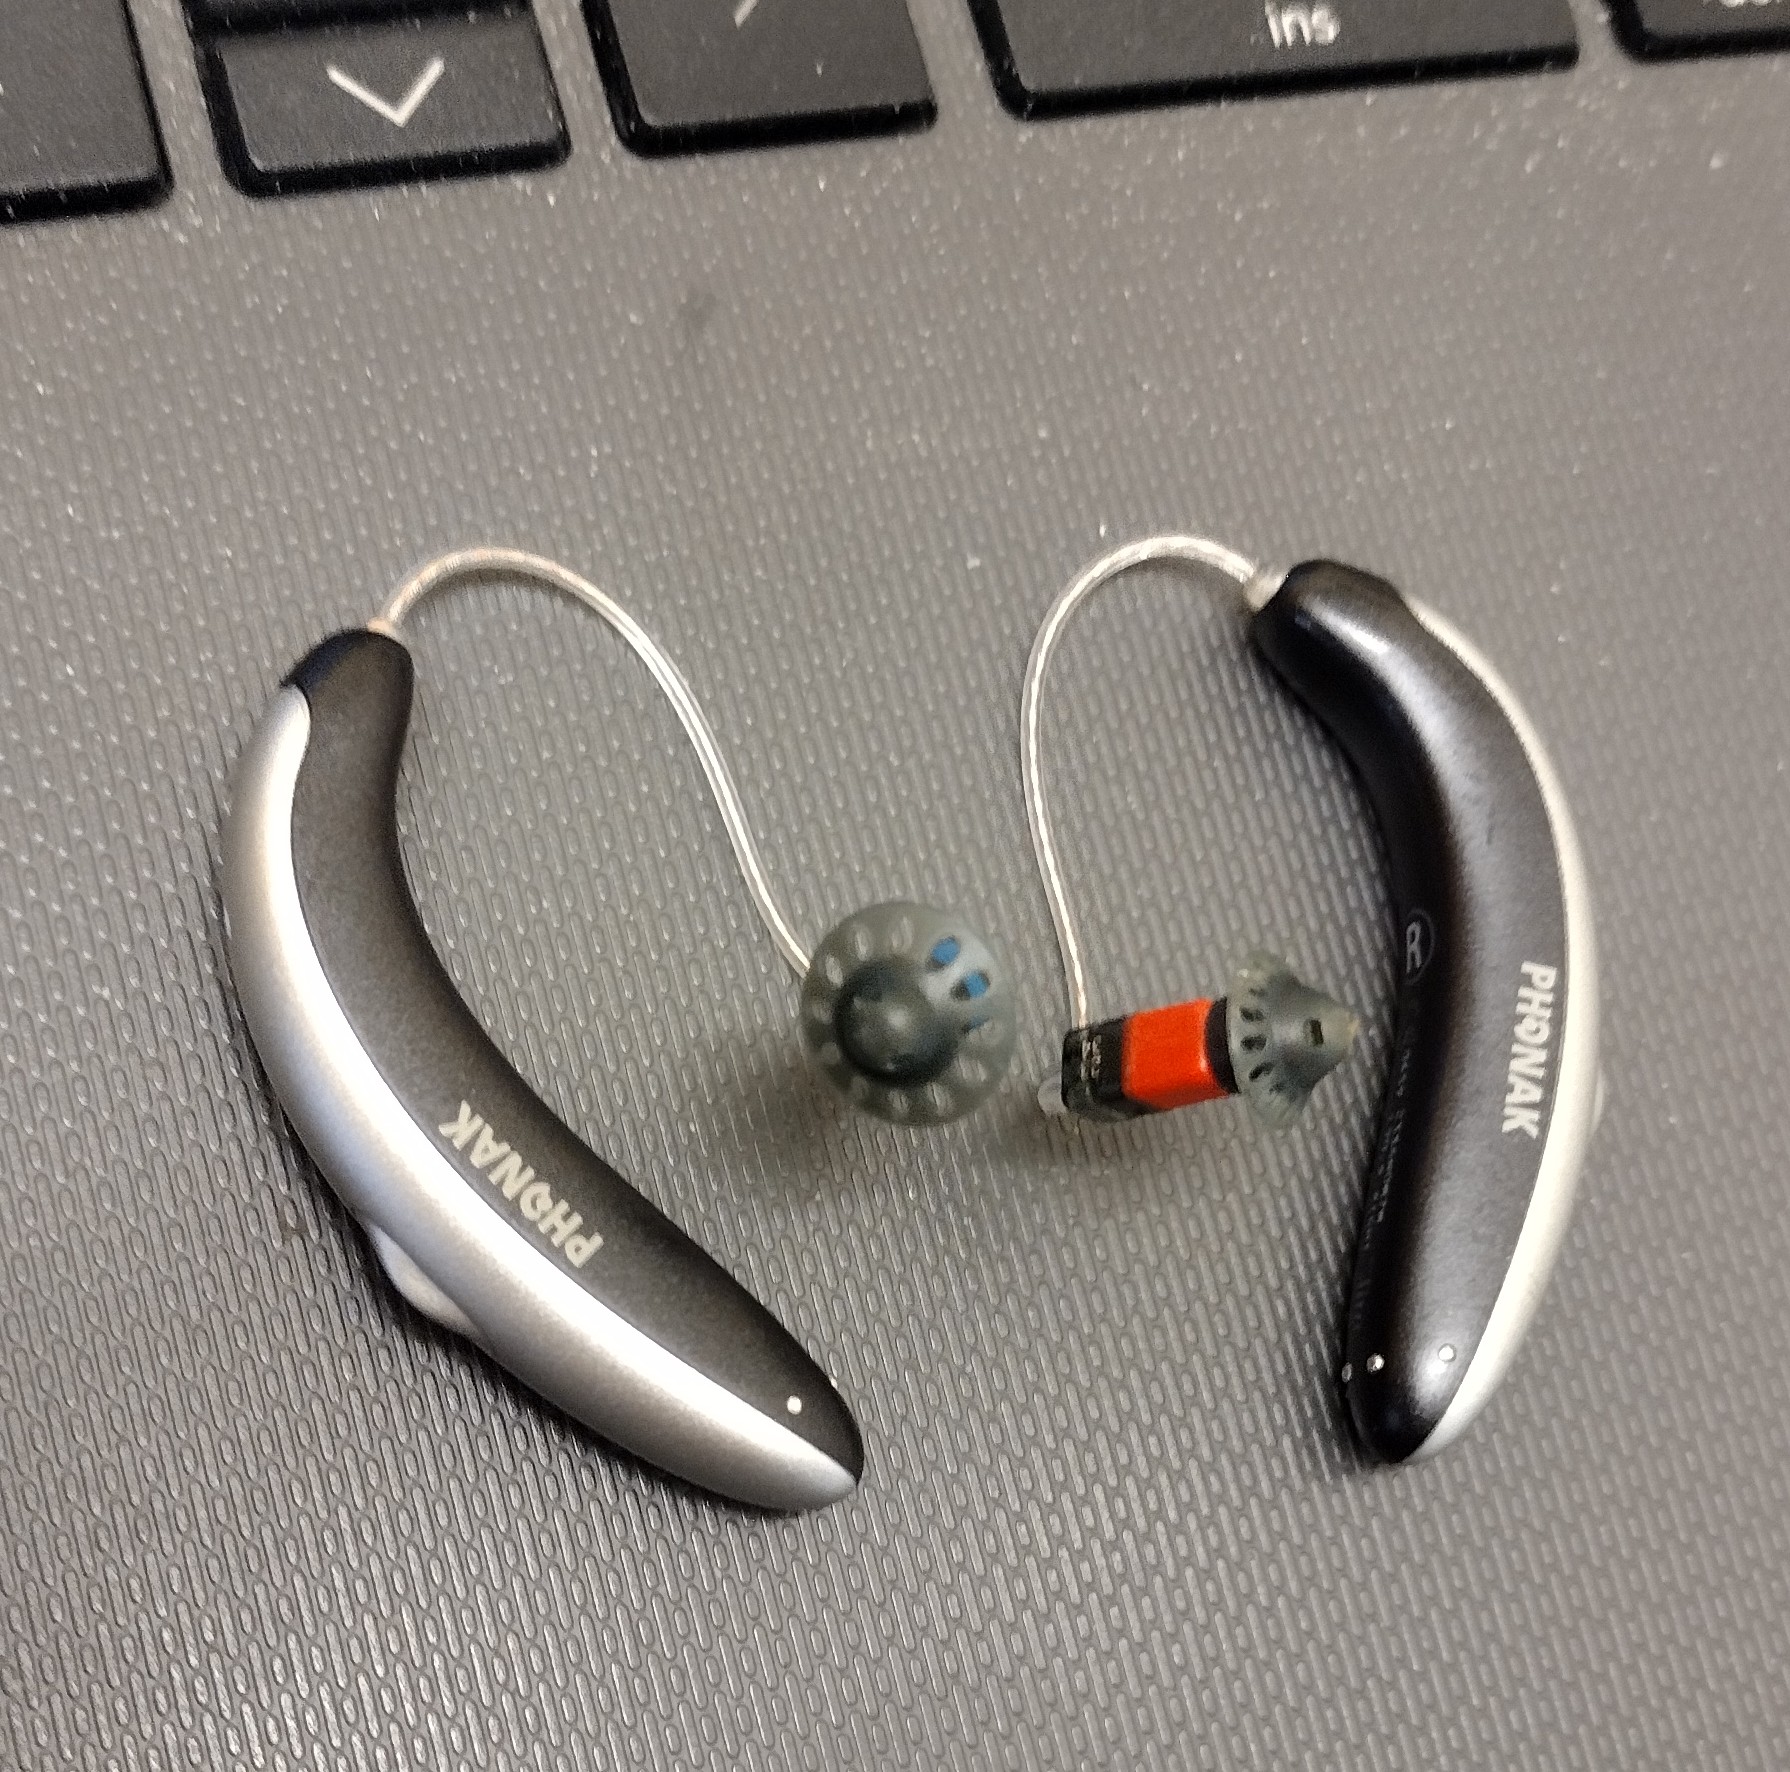 Phonak hearing aids.jpg